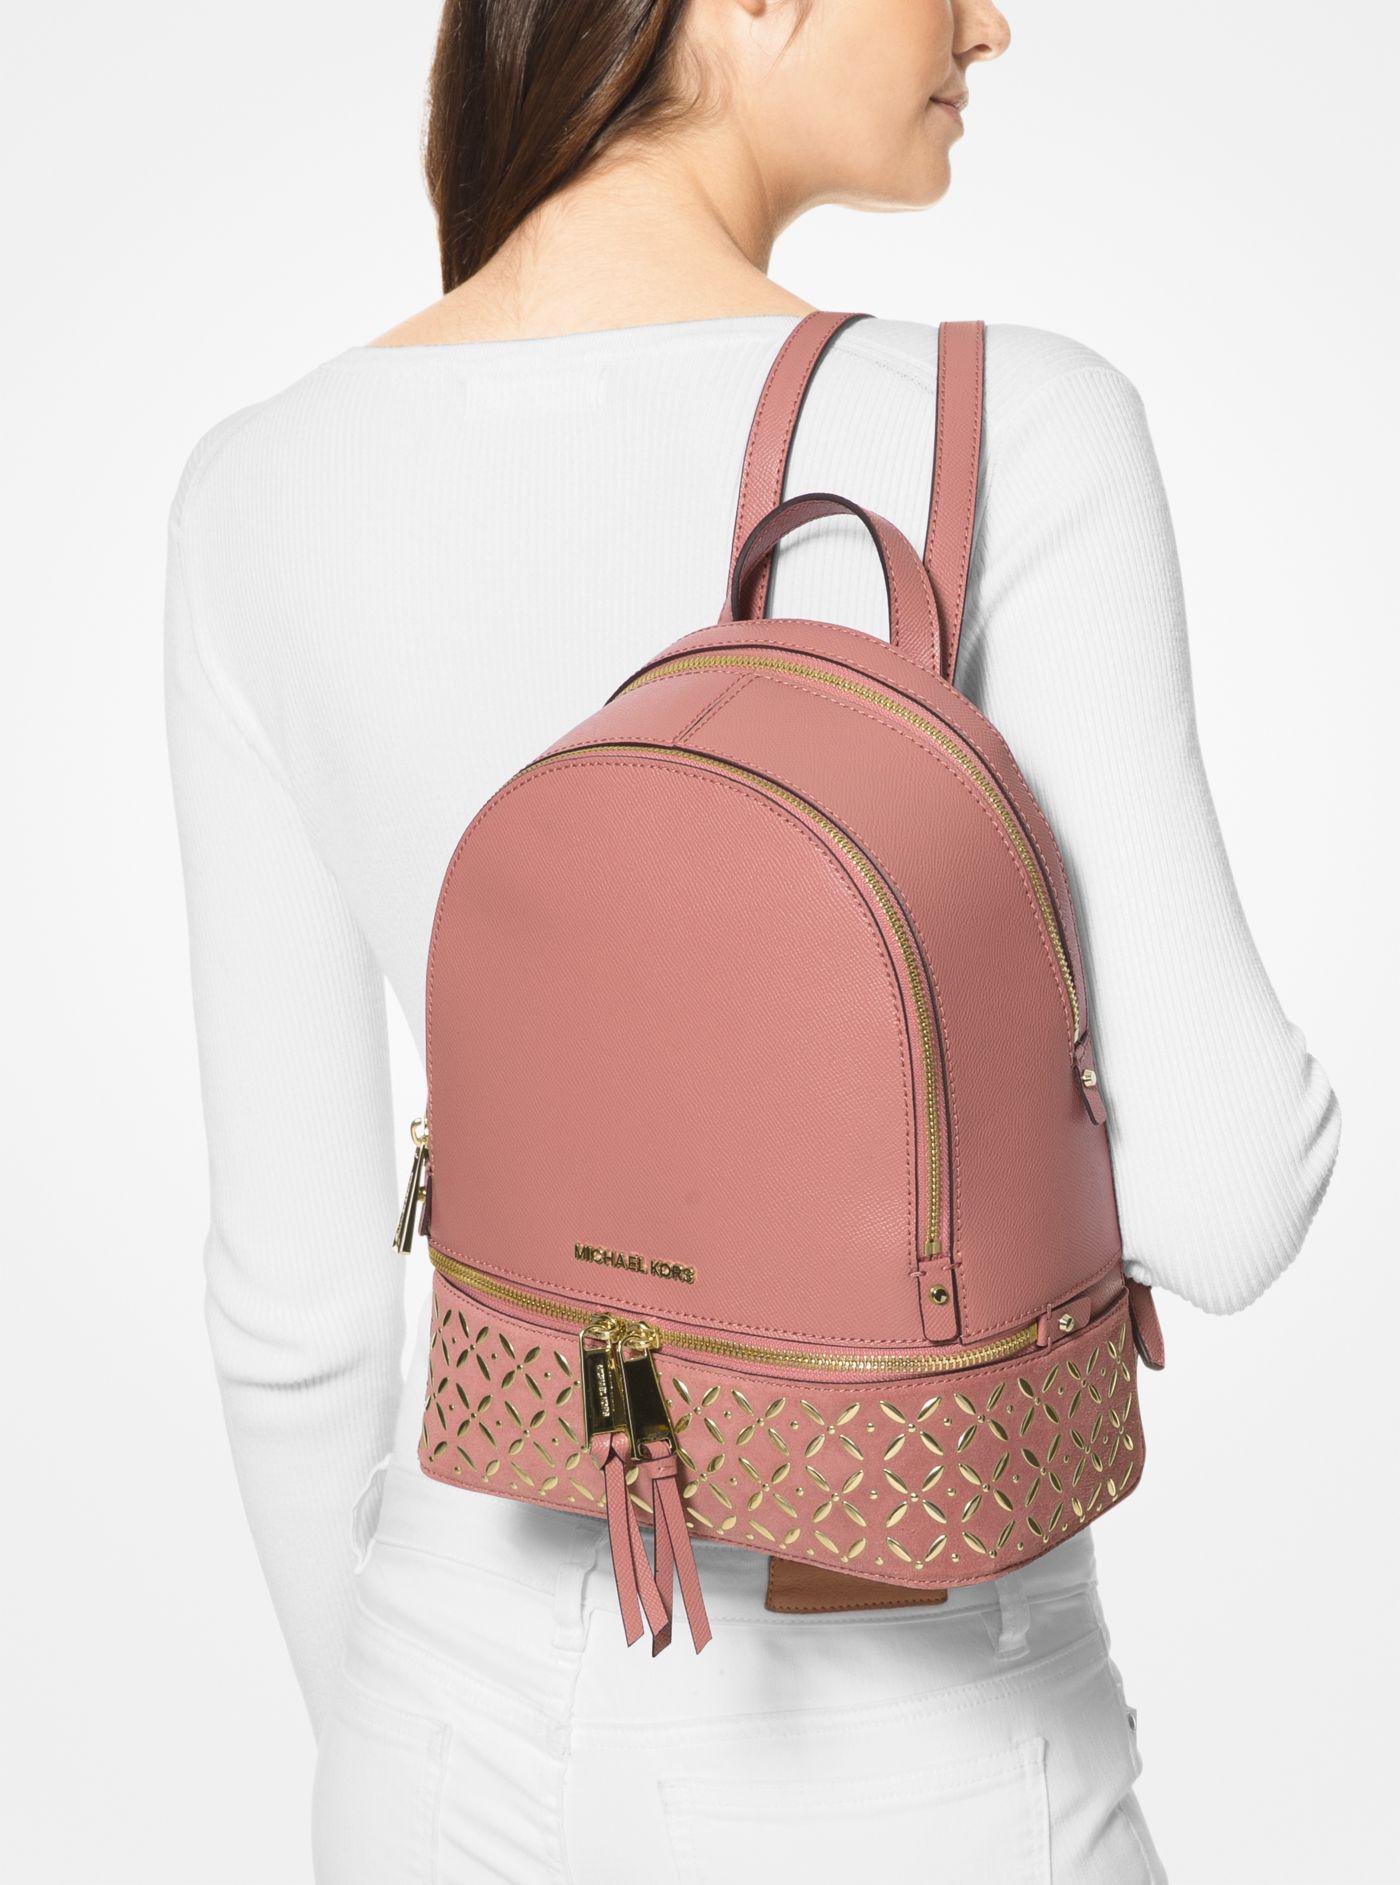 Michael Kors Rhea Medium Embellished Leather Backpack in Rose (Pink) - Lyst